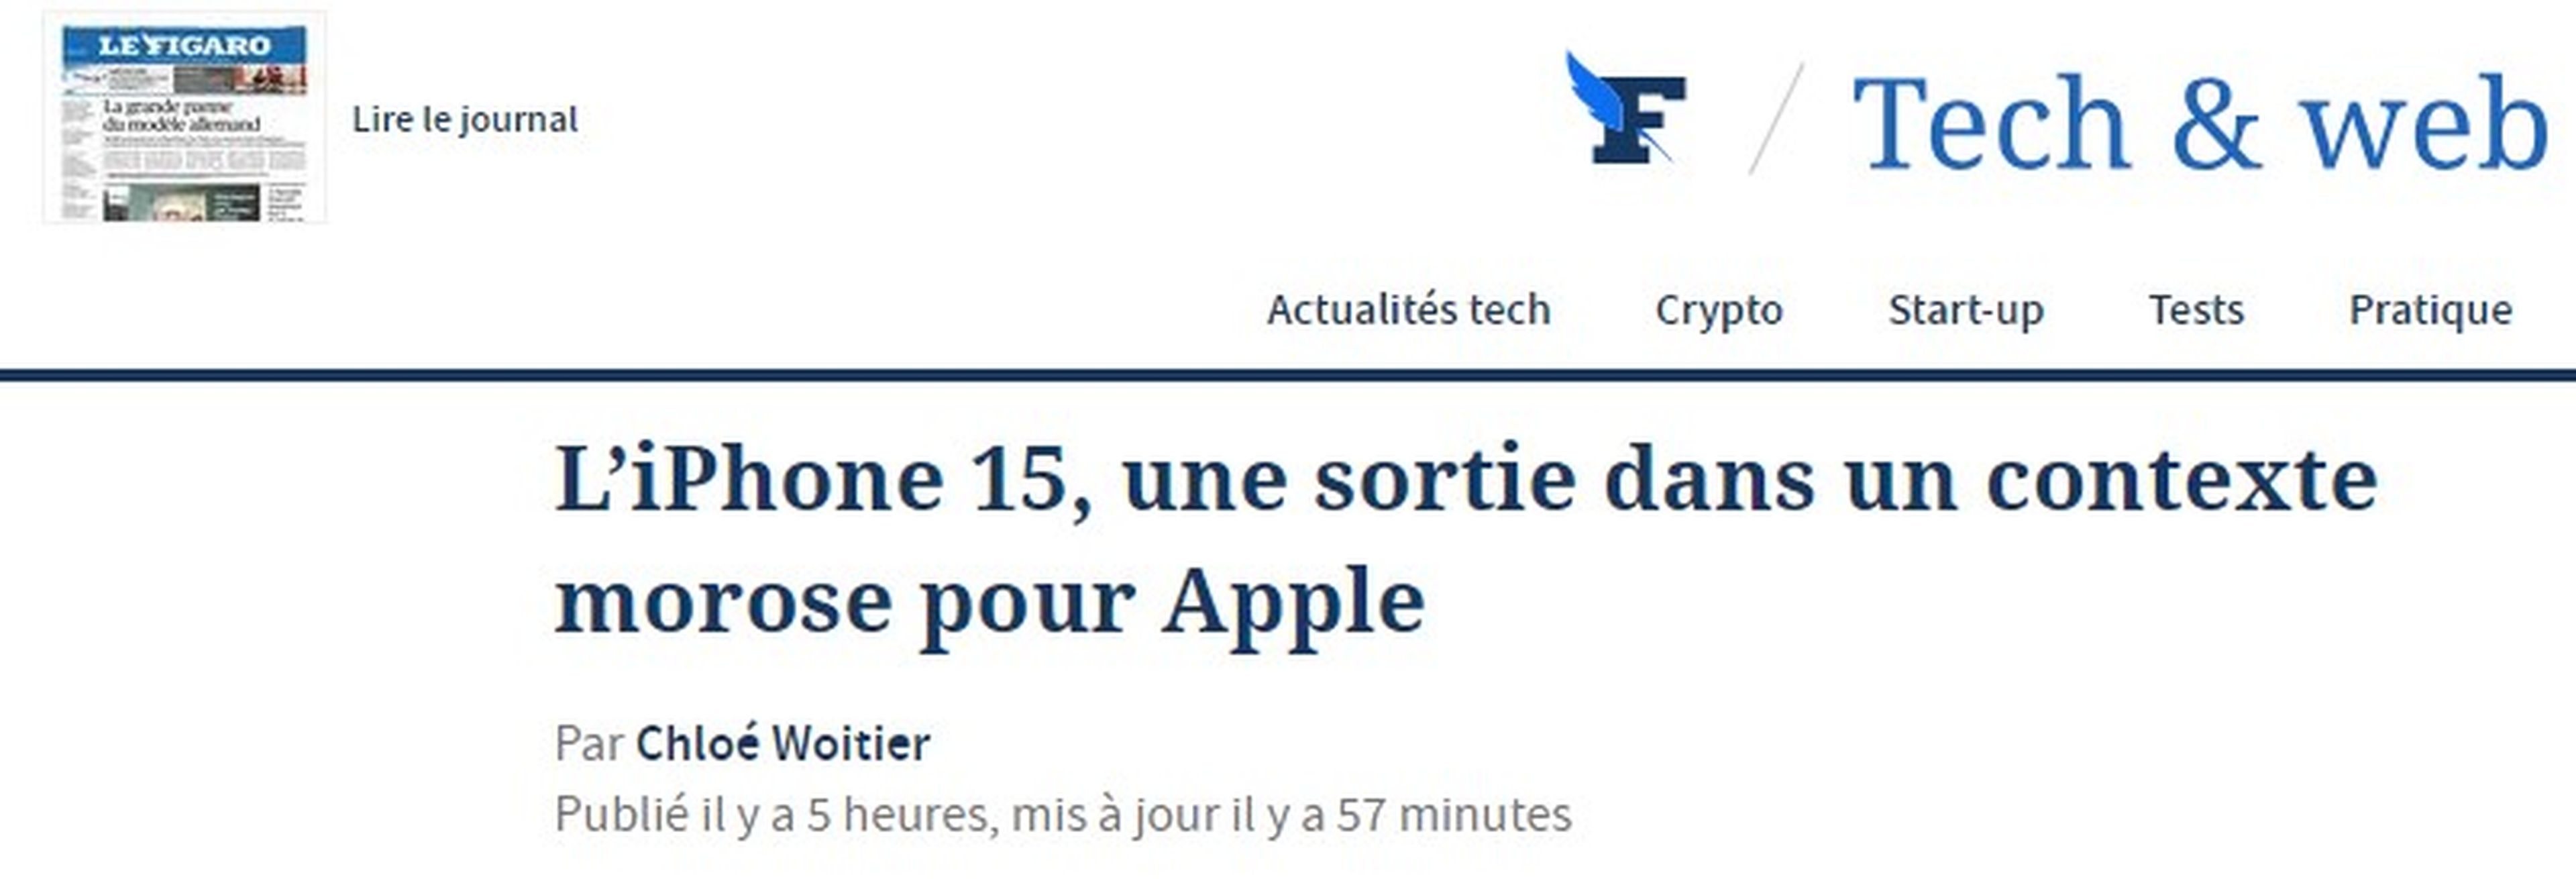 Le Figaro, iPhone 15